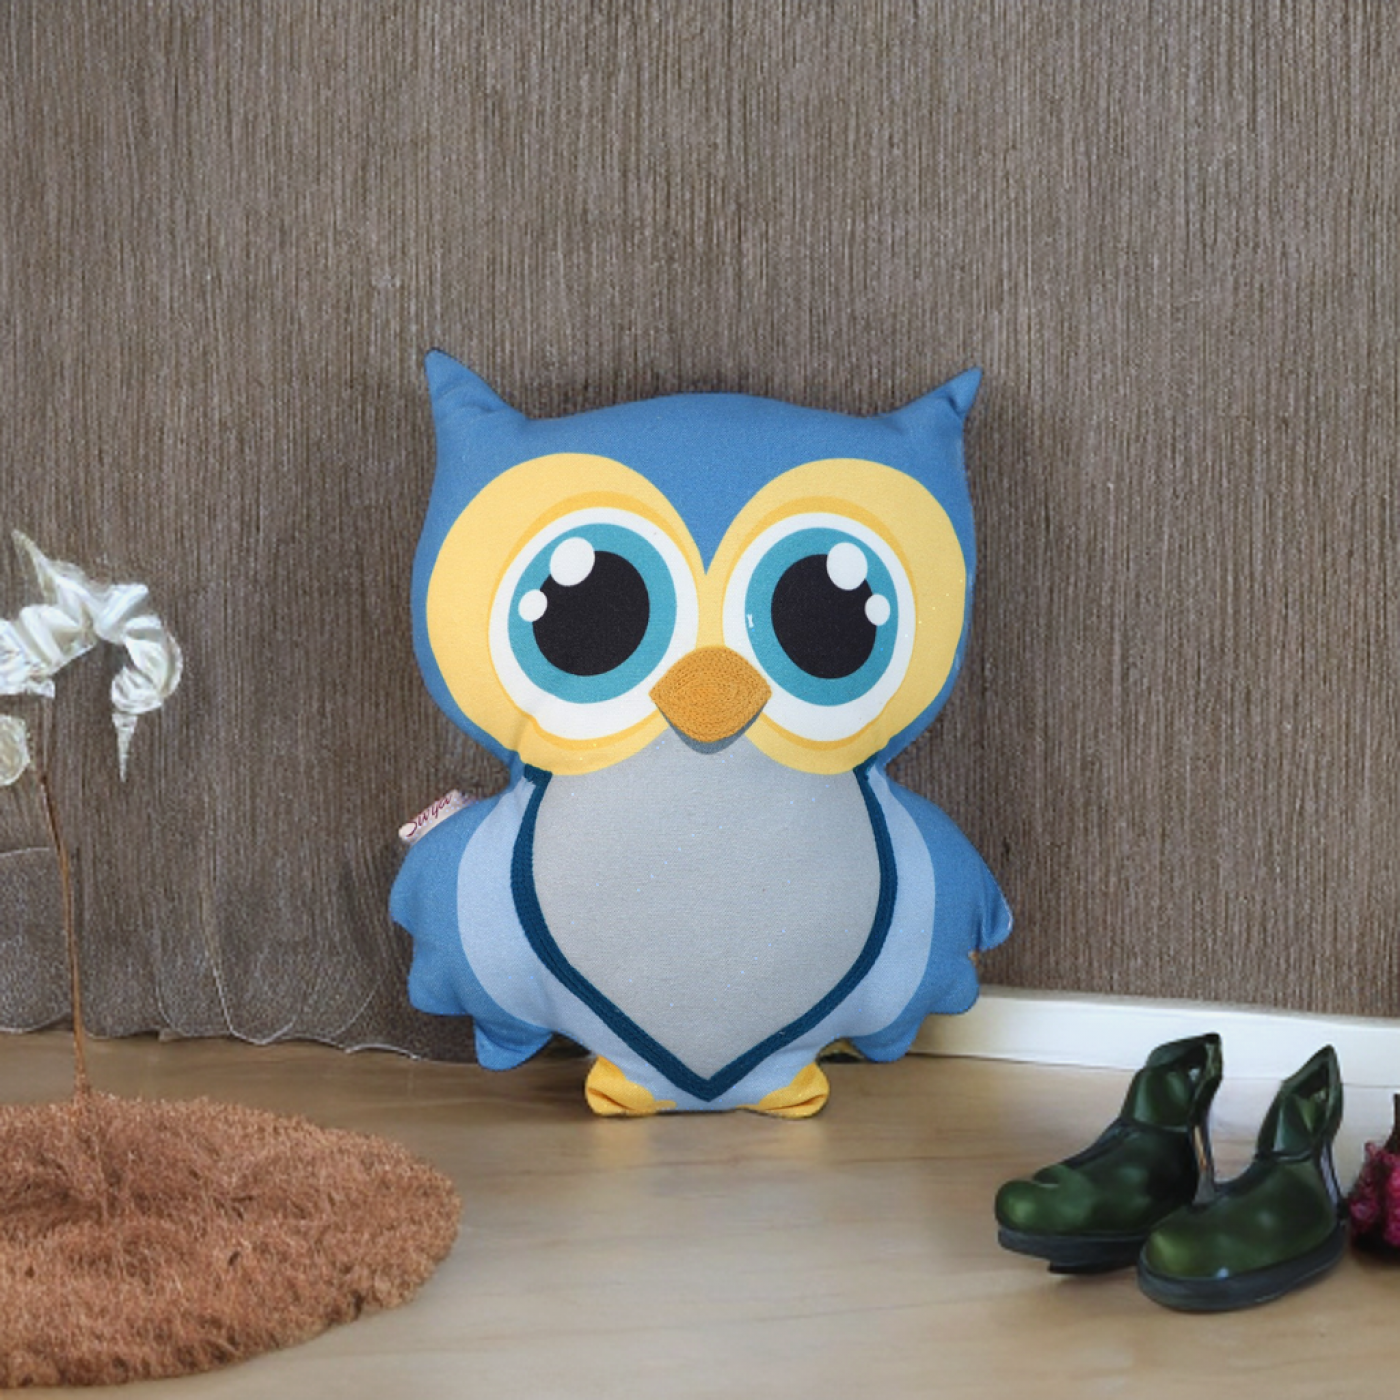 Whimsical Owlet Delight Sivya's Decorative Cute Owl Shaped Cushion